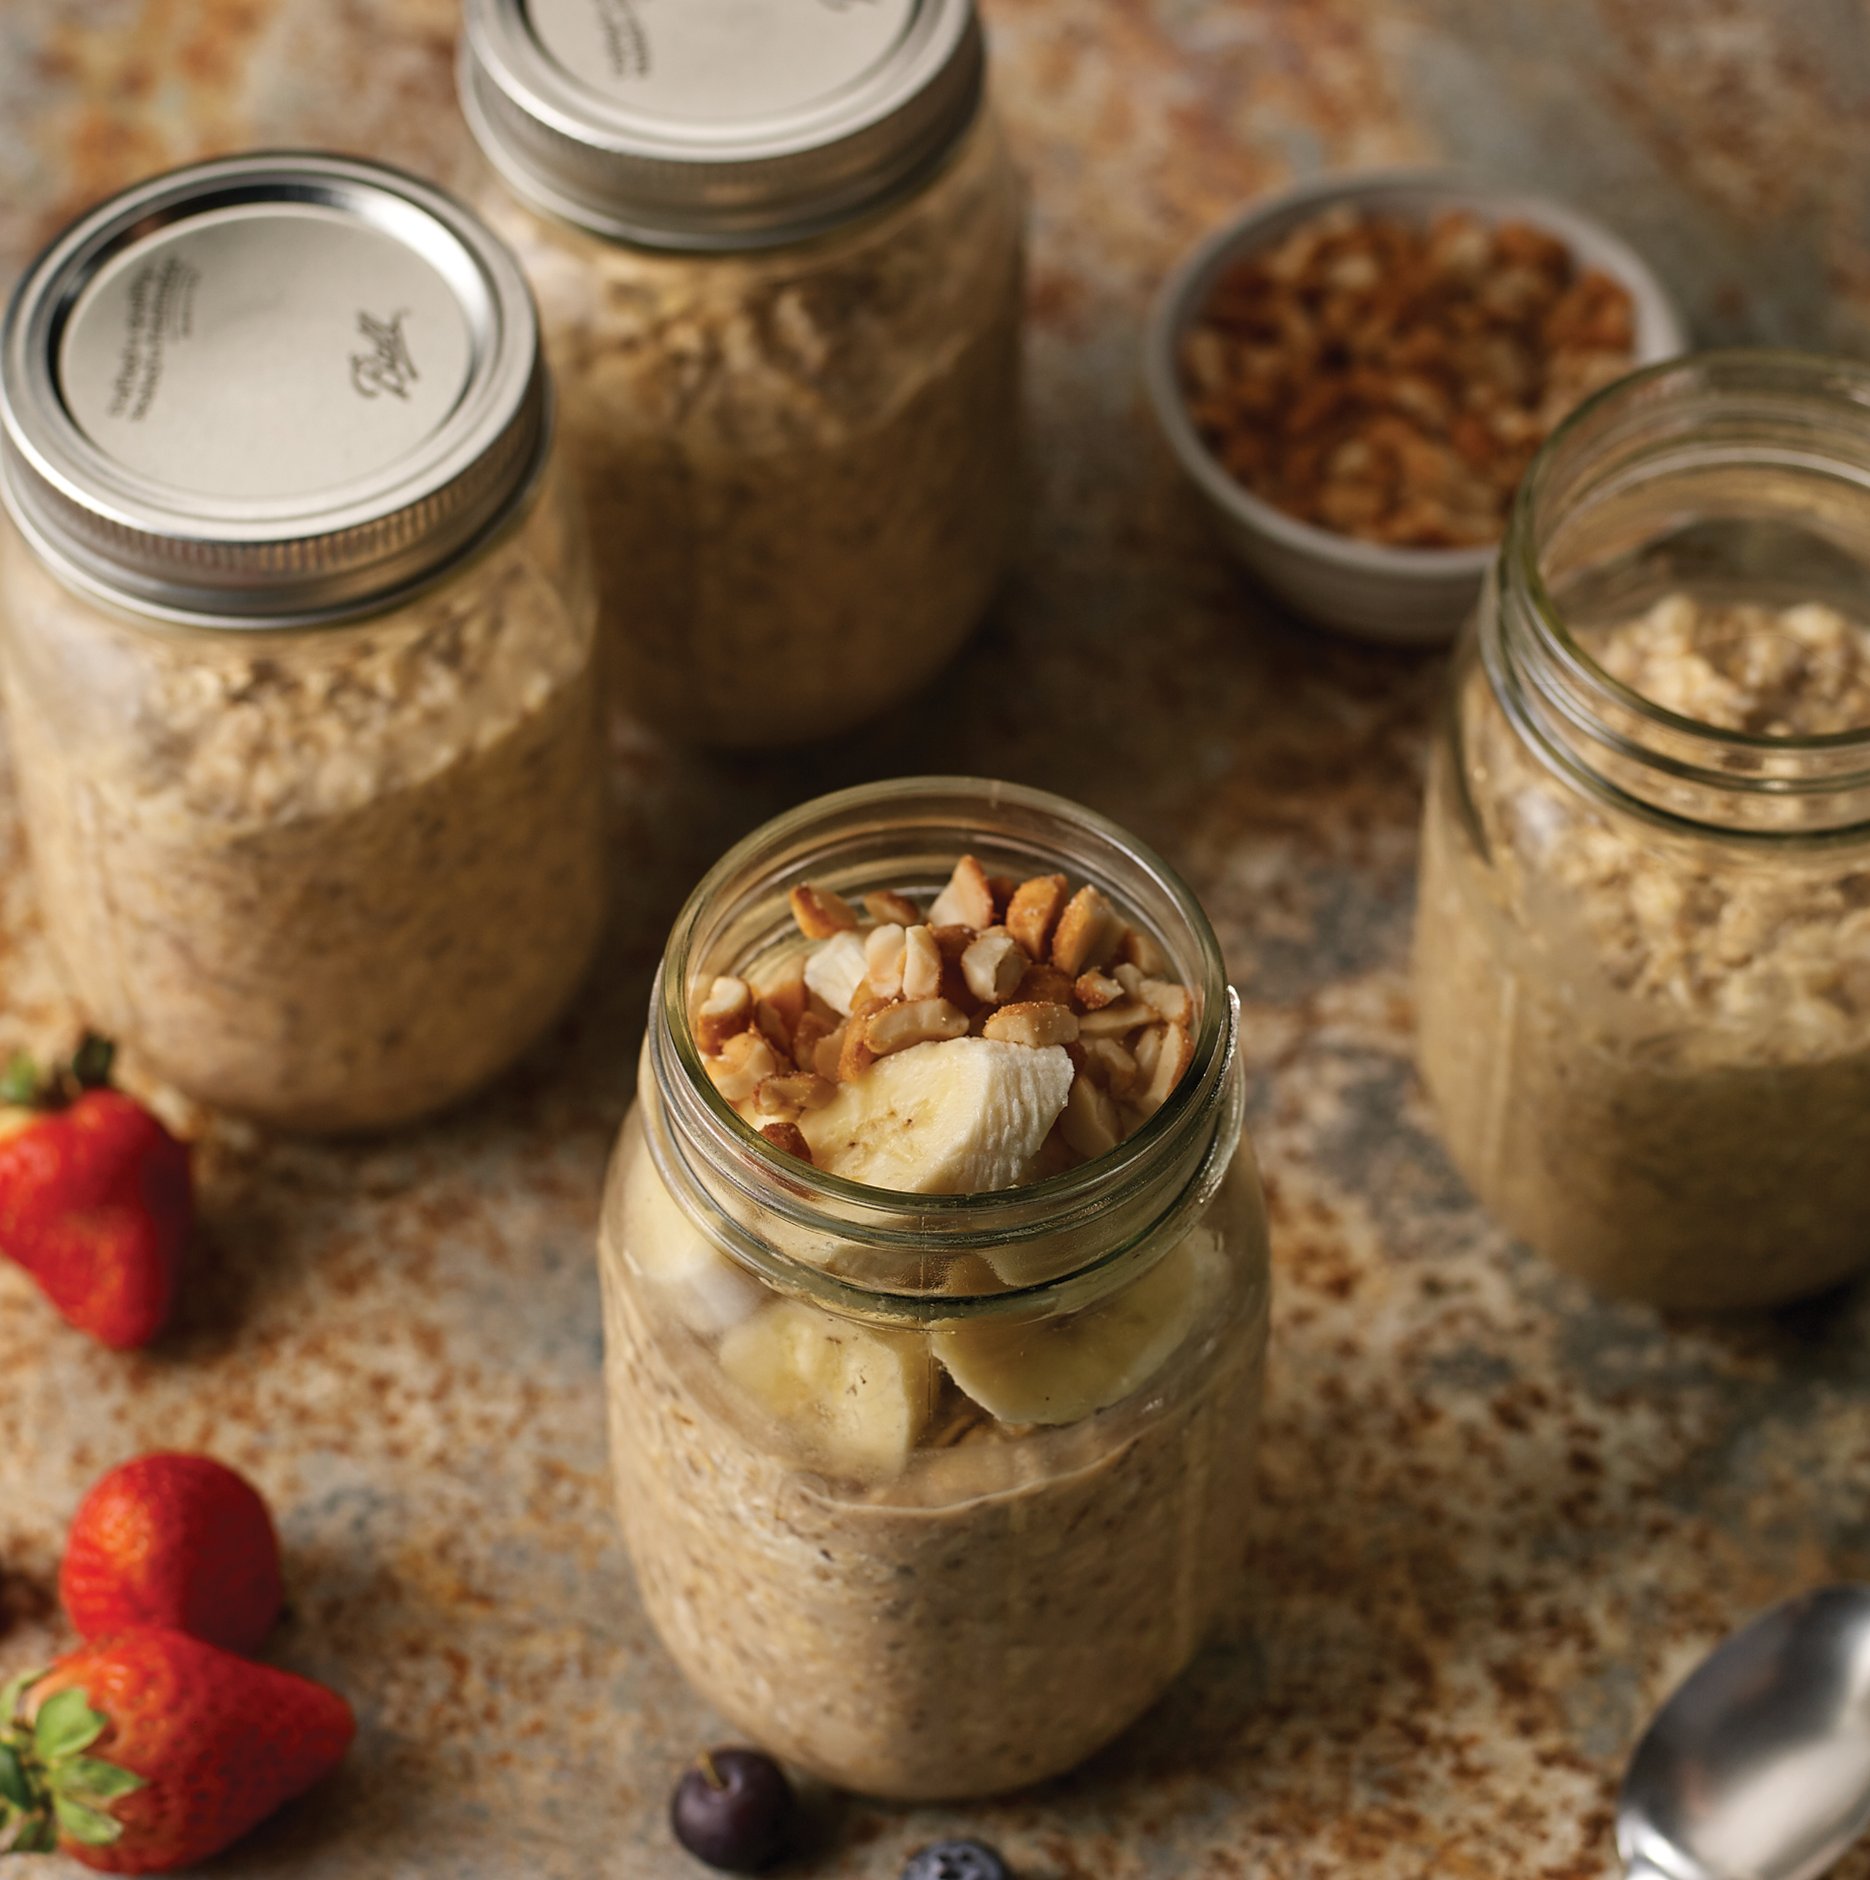 https://images.heb.com/is/image/HEBGrocery/Test/vegan-peanut-butter-overnight-oats-recipe.jpg